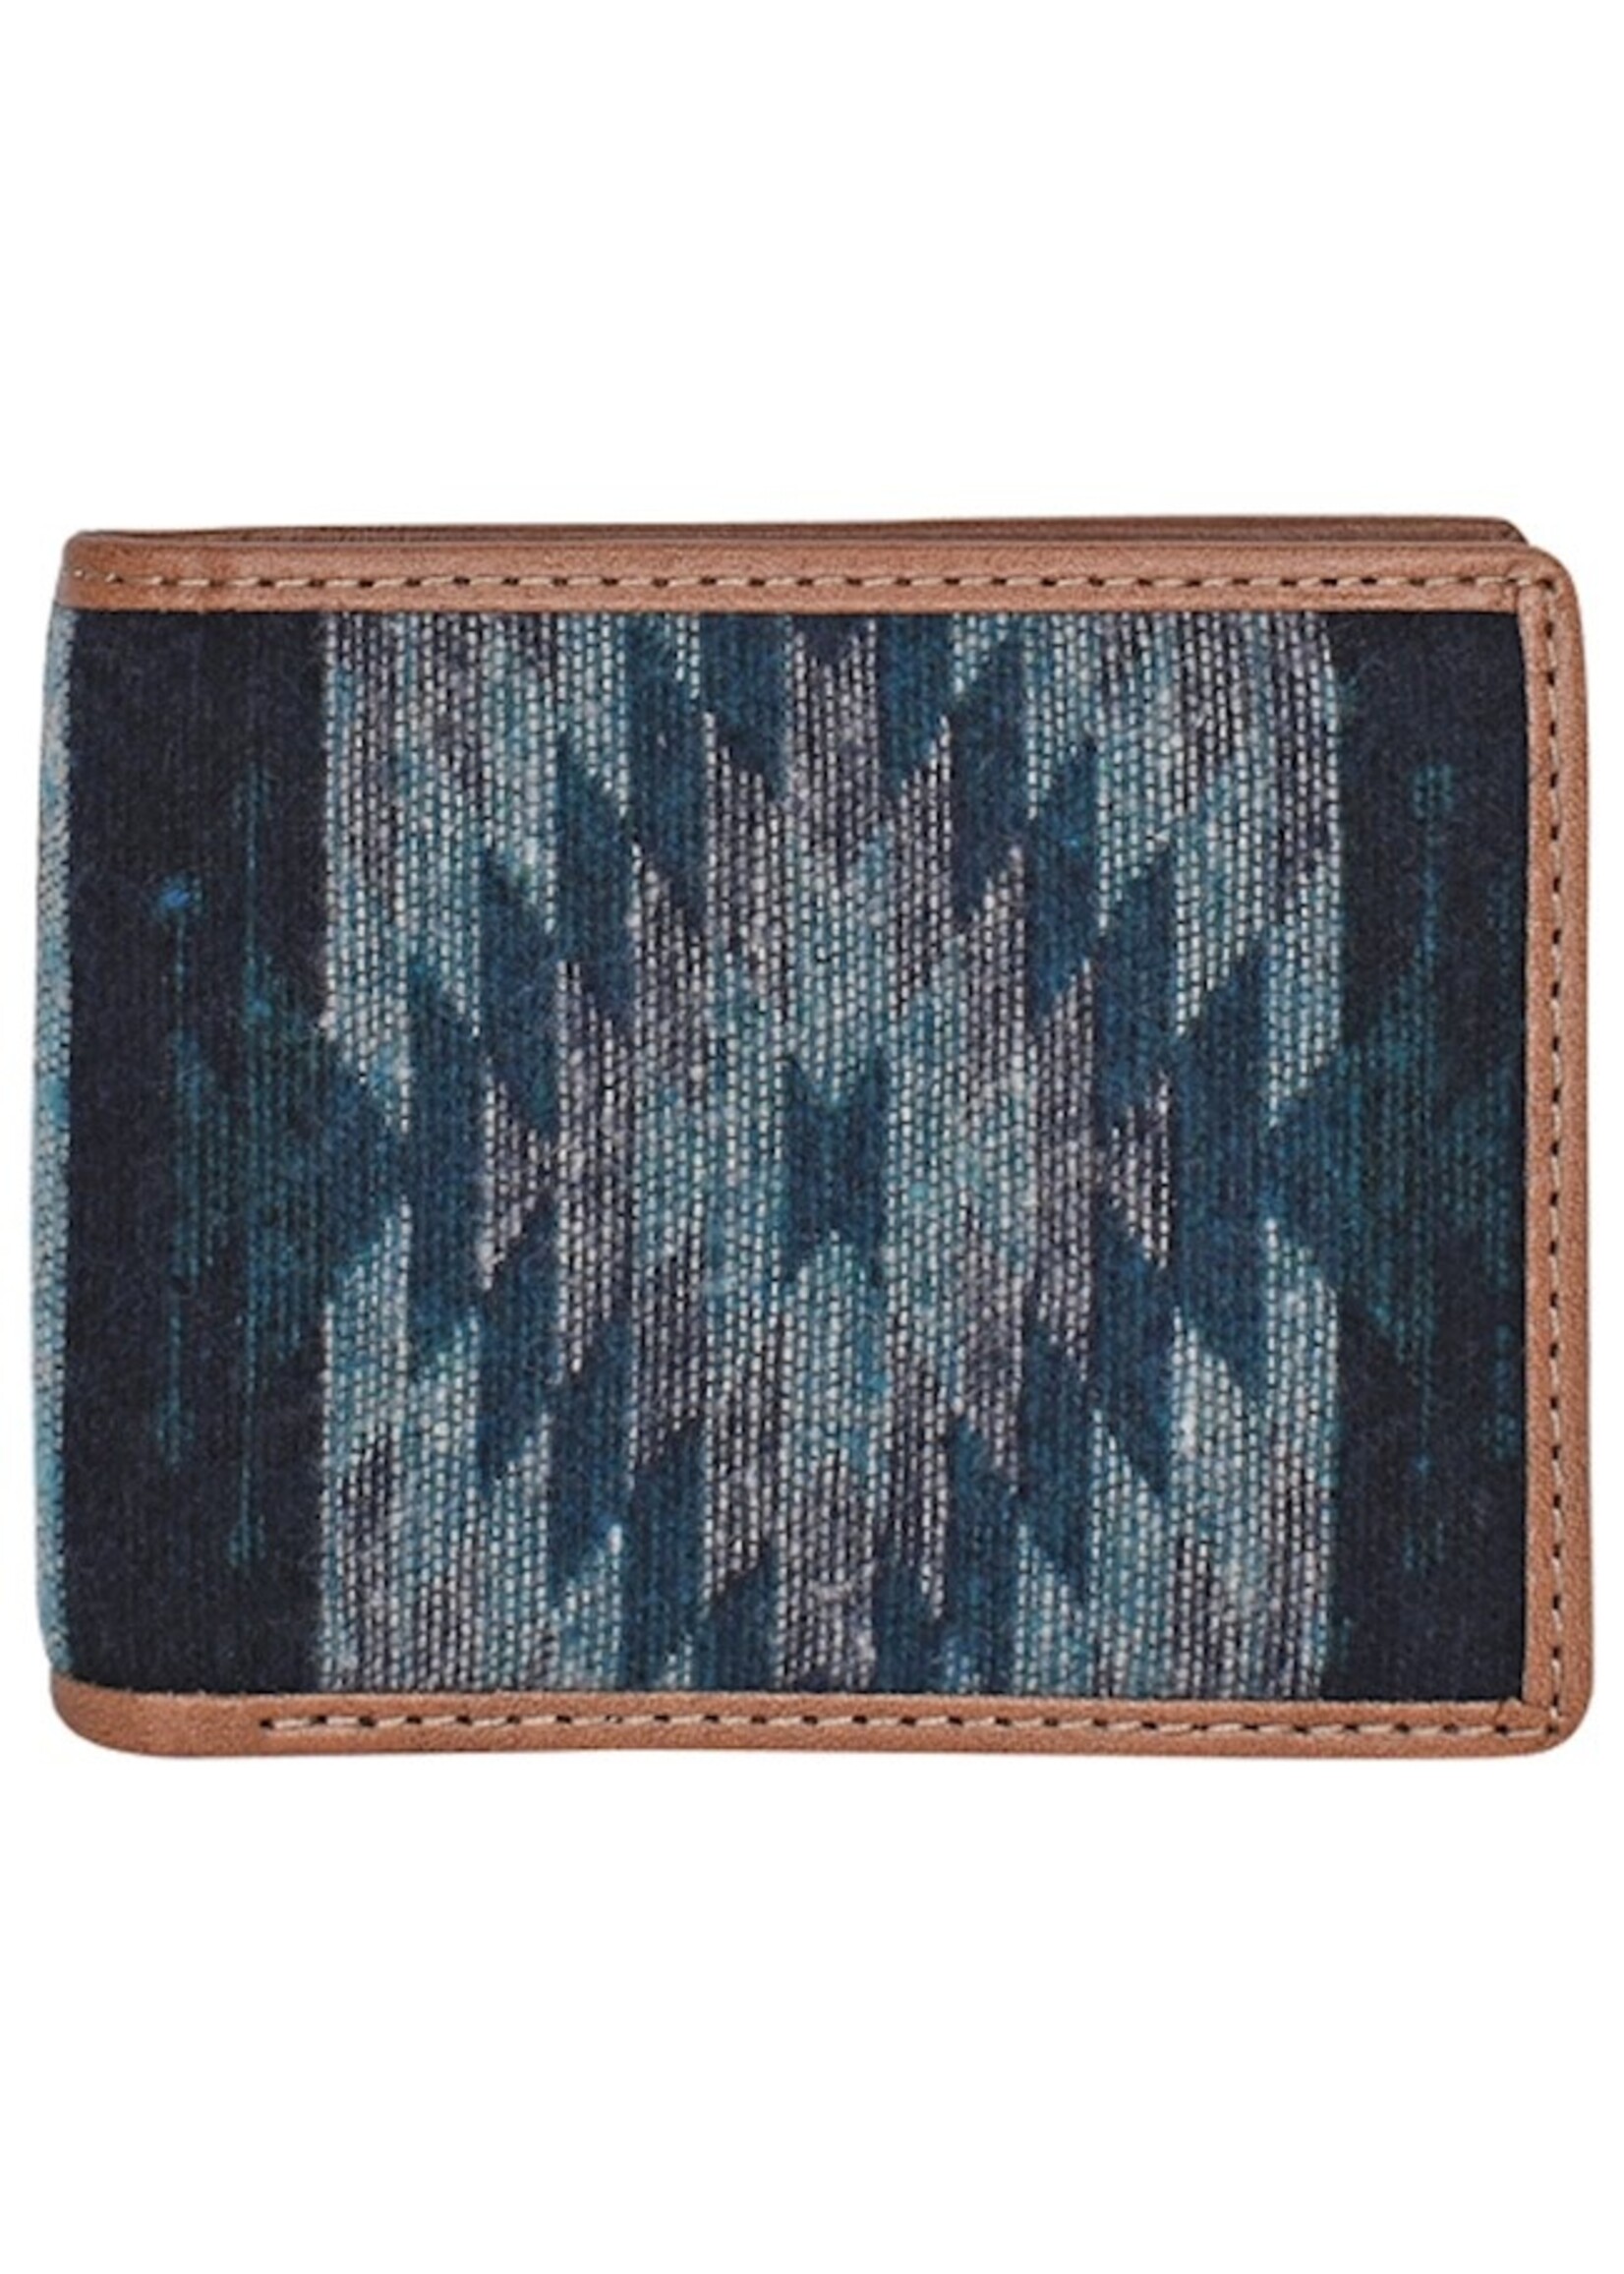 Tony Lama Bifold Wallet - Tony Lama - Southwestern Blanket Design